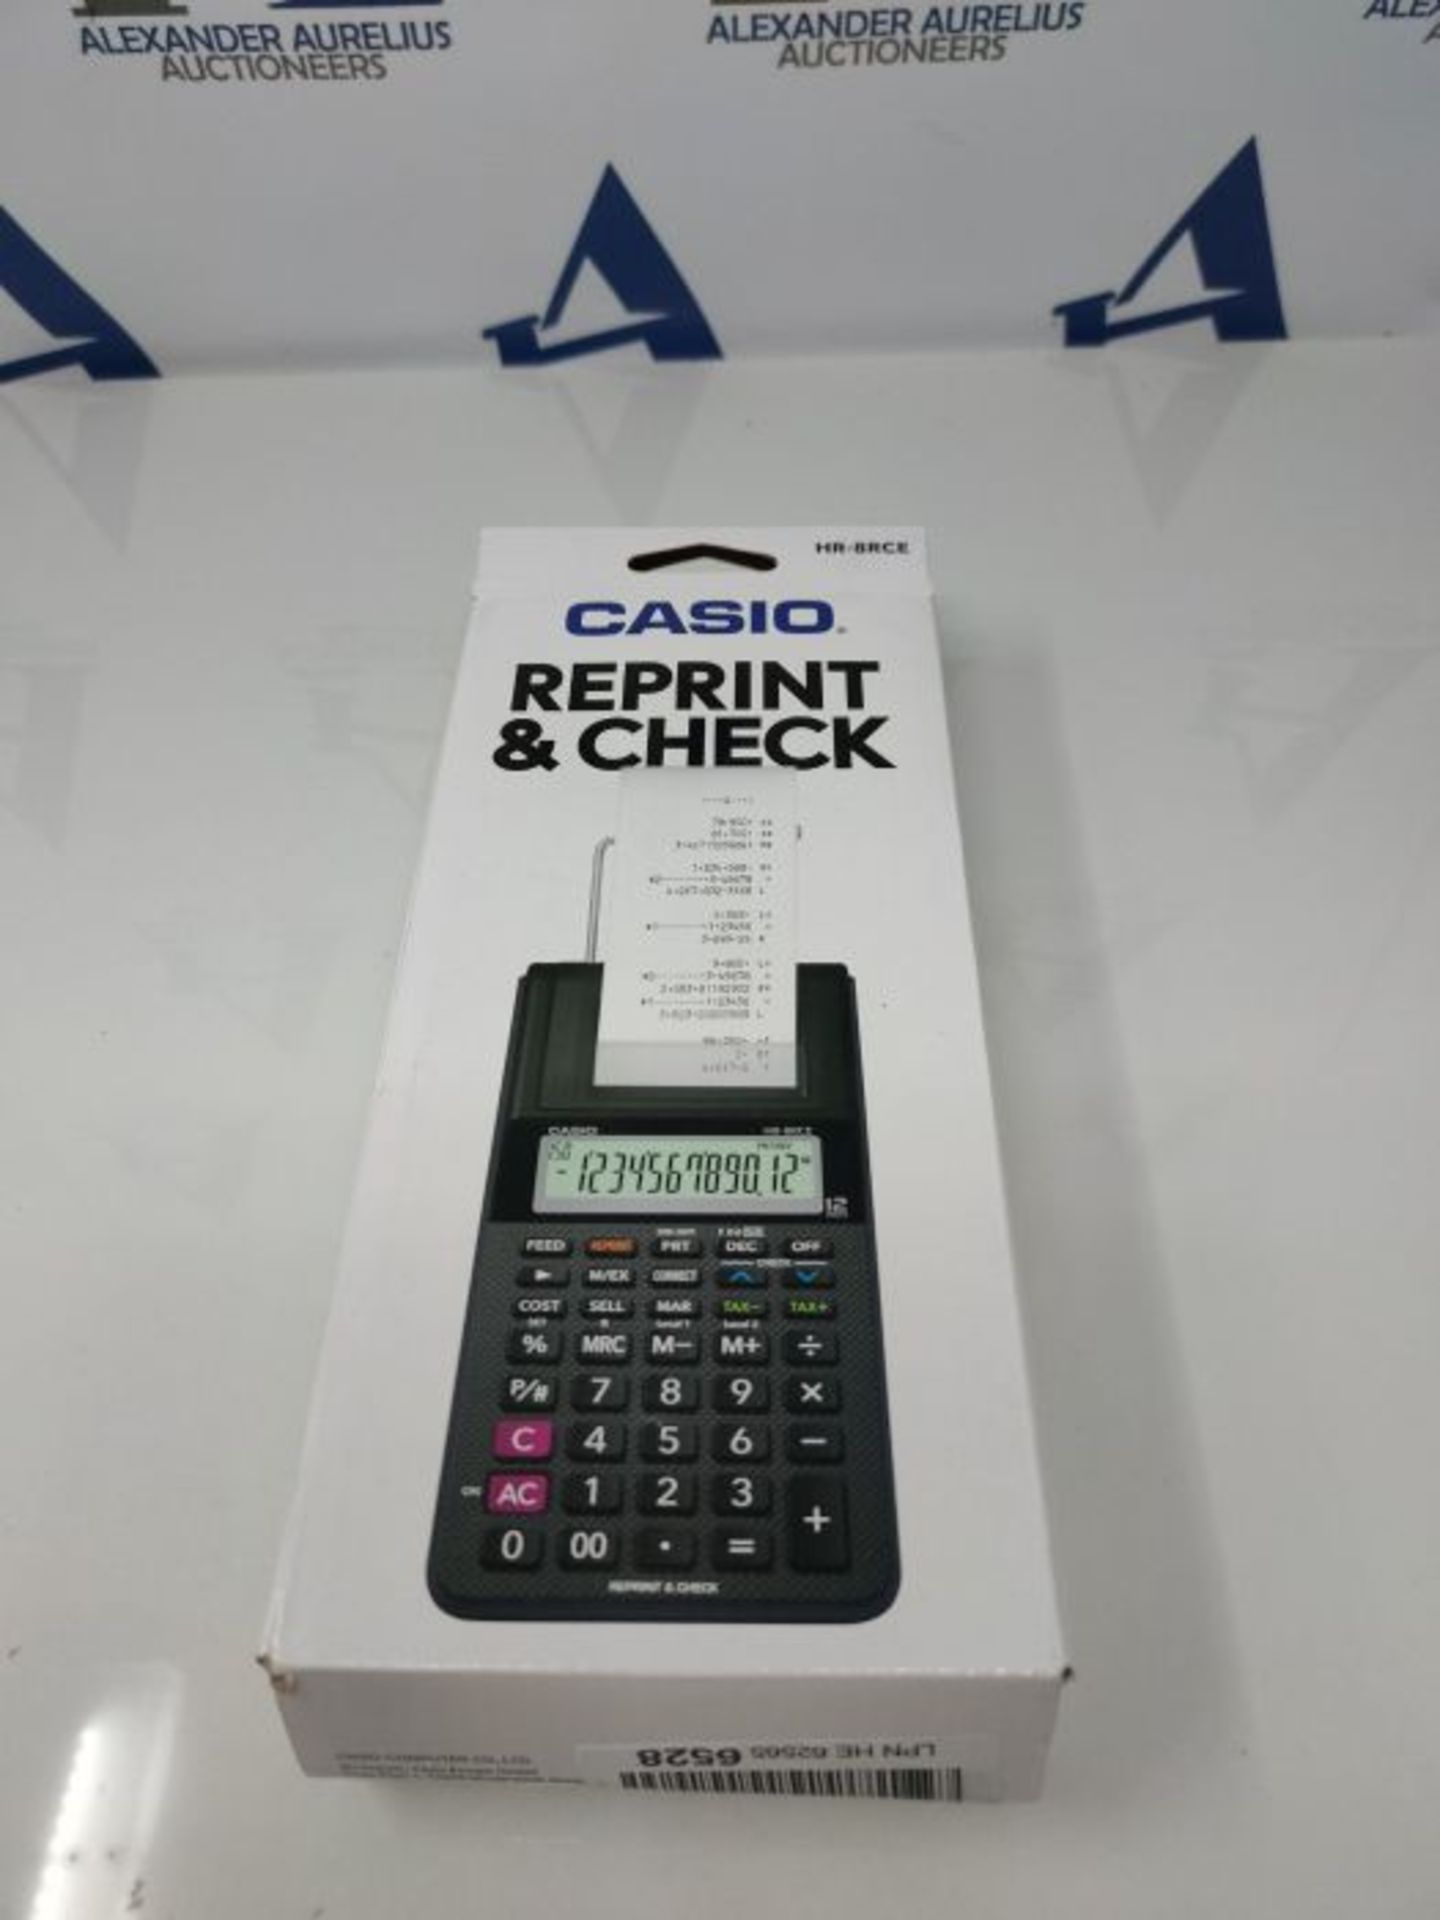 Casio HR-8RCE Printing Calculator, Black - Image 2 of 3